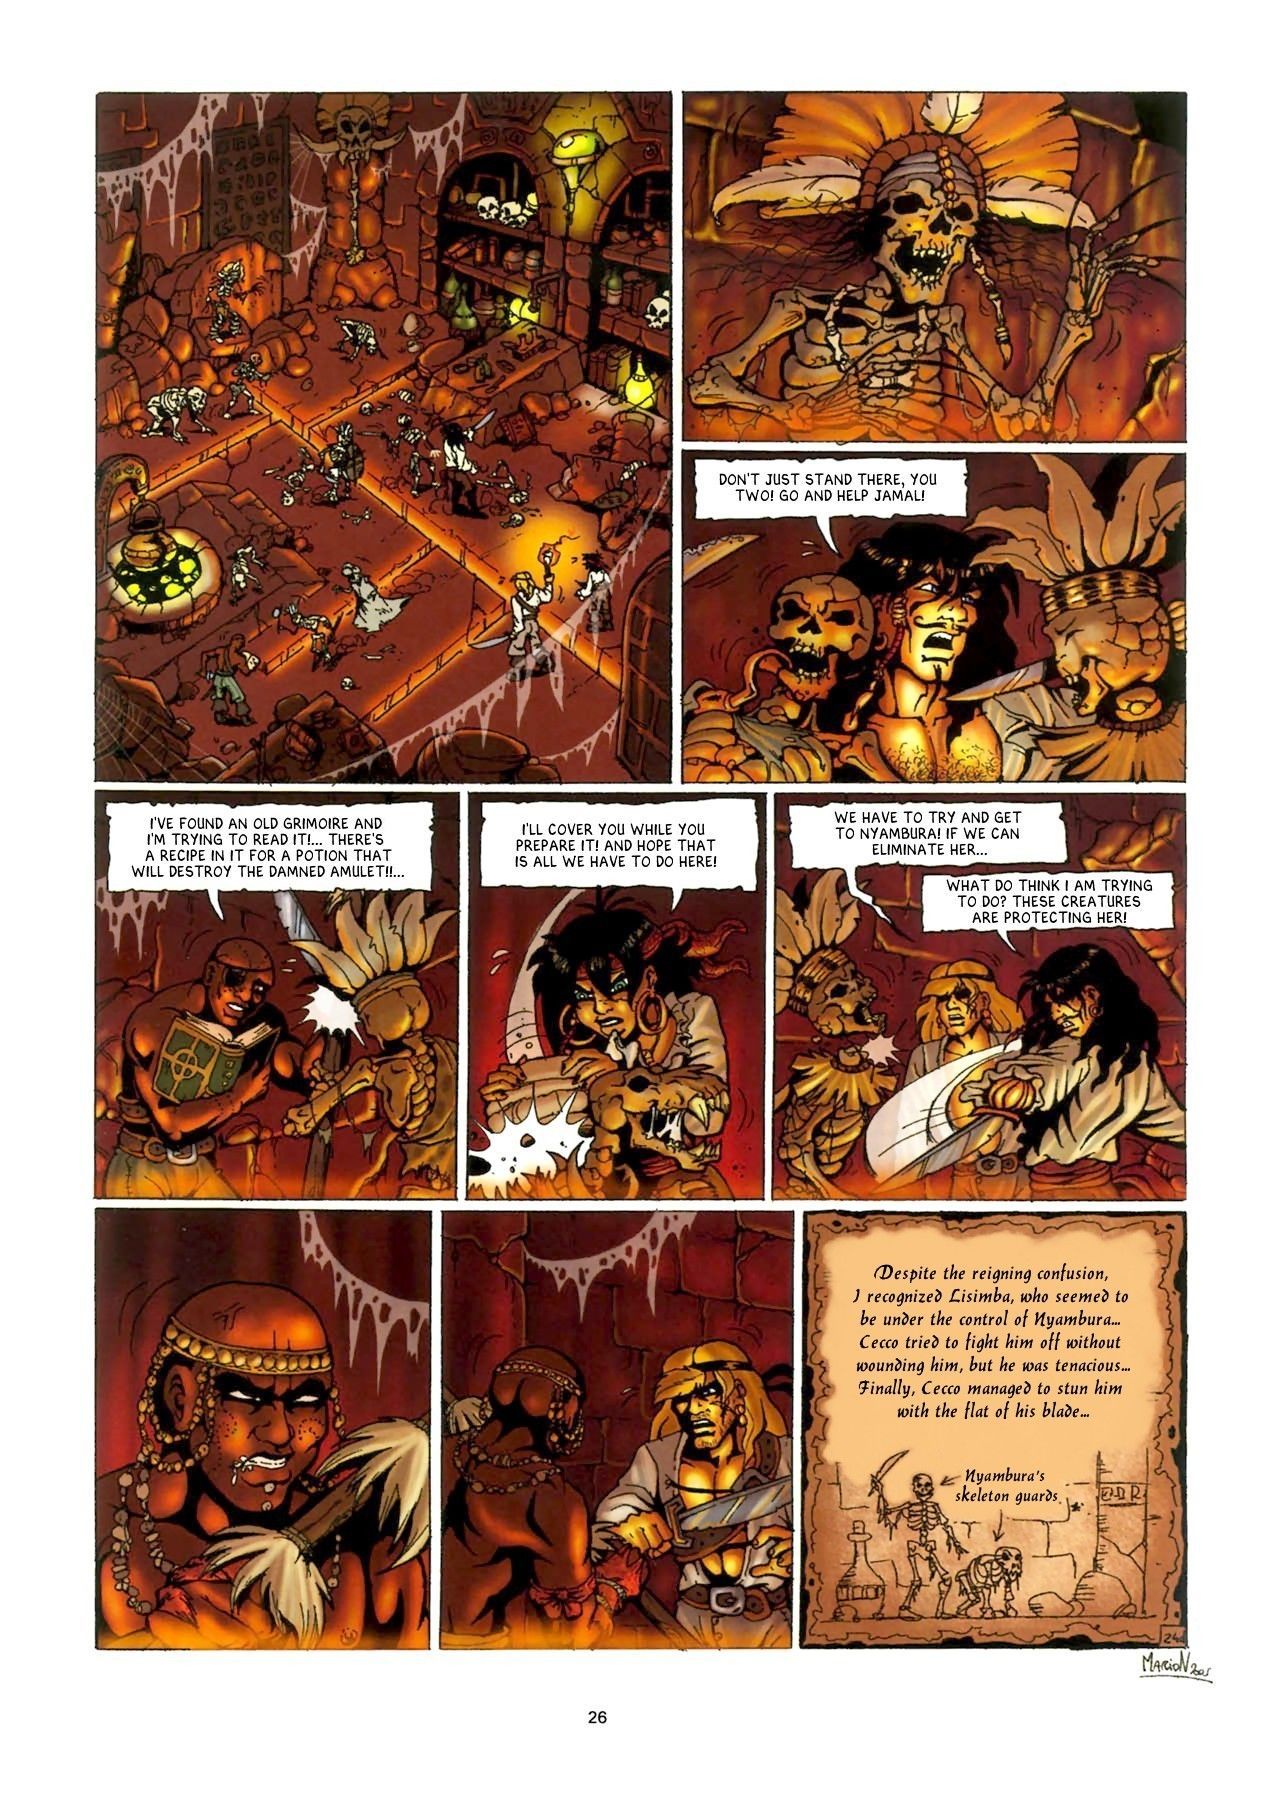 Marion Poinsot Dread Mac Farlane #4: Nyambura (Peter Pan) {JJ} - part 2